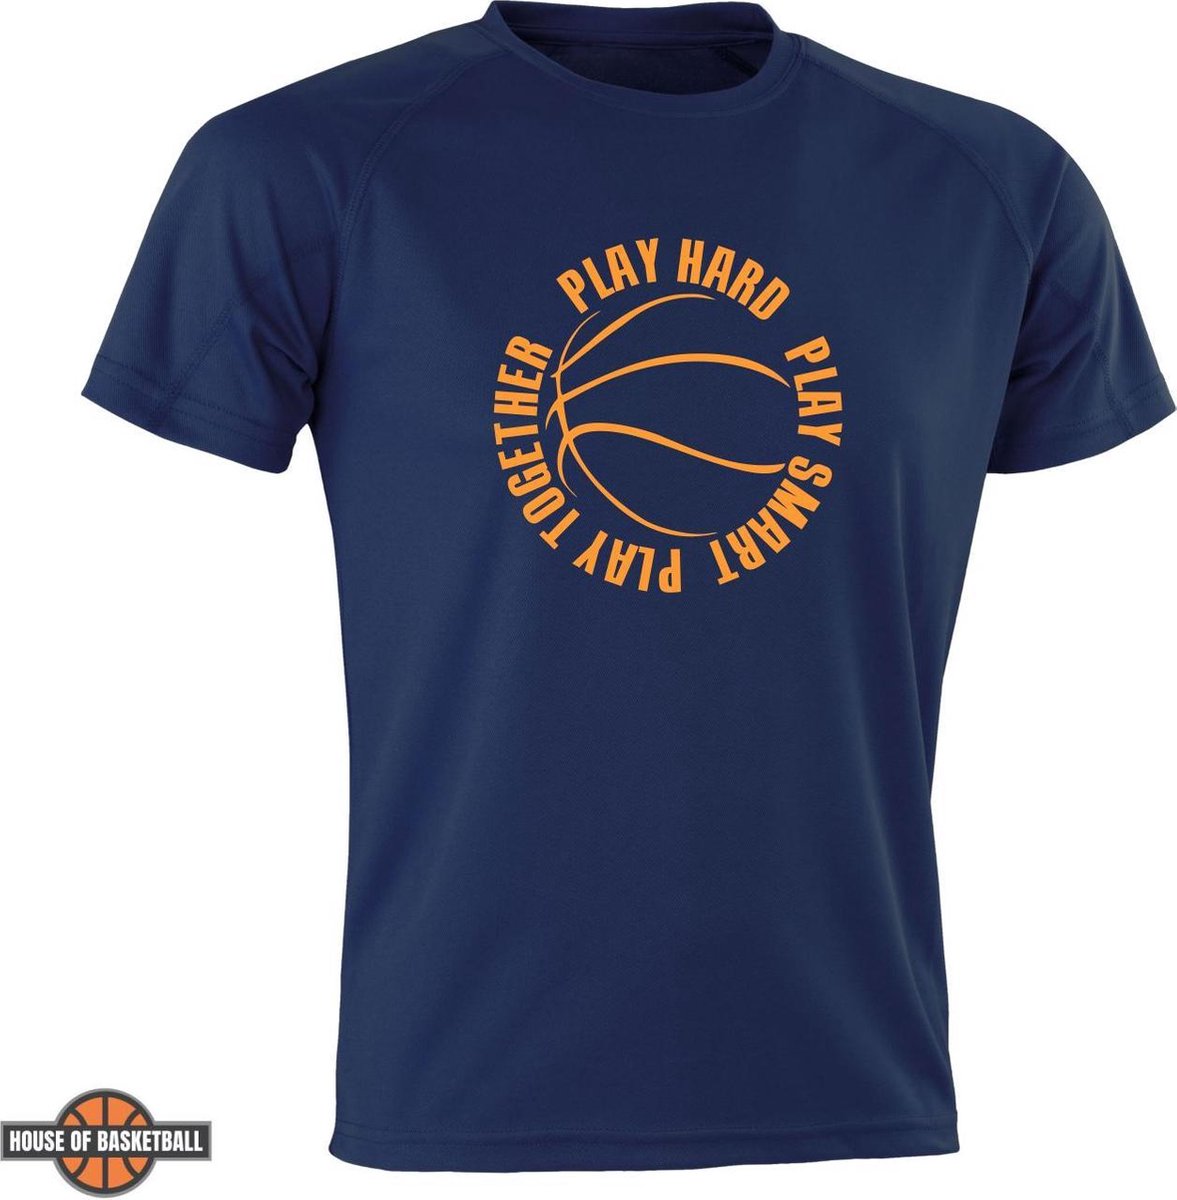 Play Hard, Play Smart, Play Together T-shirt – marineblauw – XXS